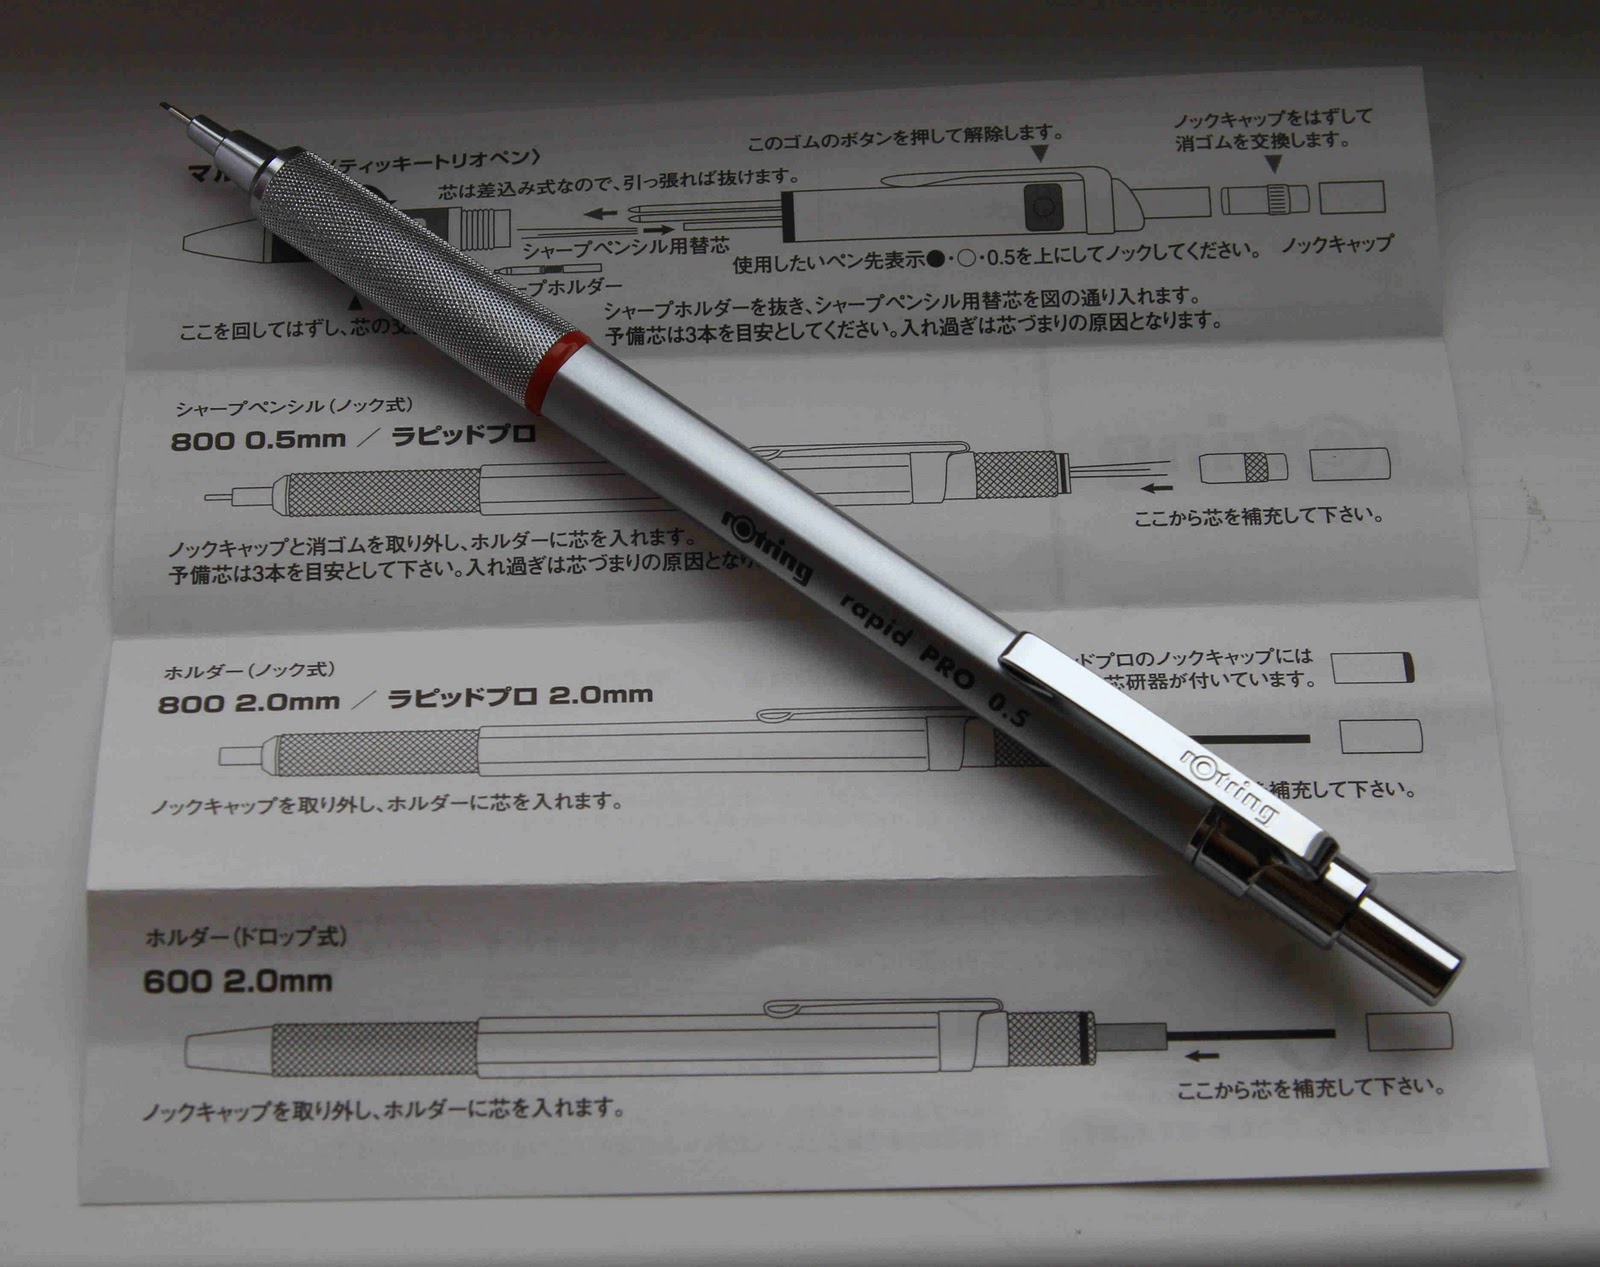 DMP - Dave's Mechanical Pencils: Rotring Rapid Pro Mechanical Pencil Review